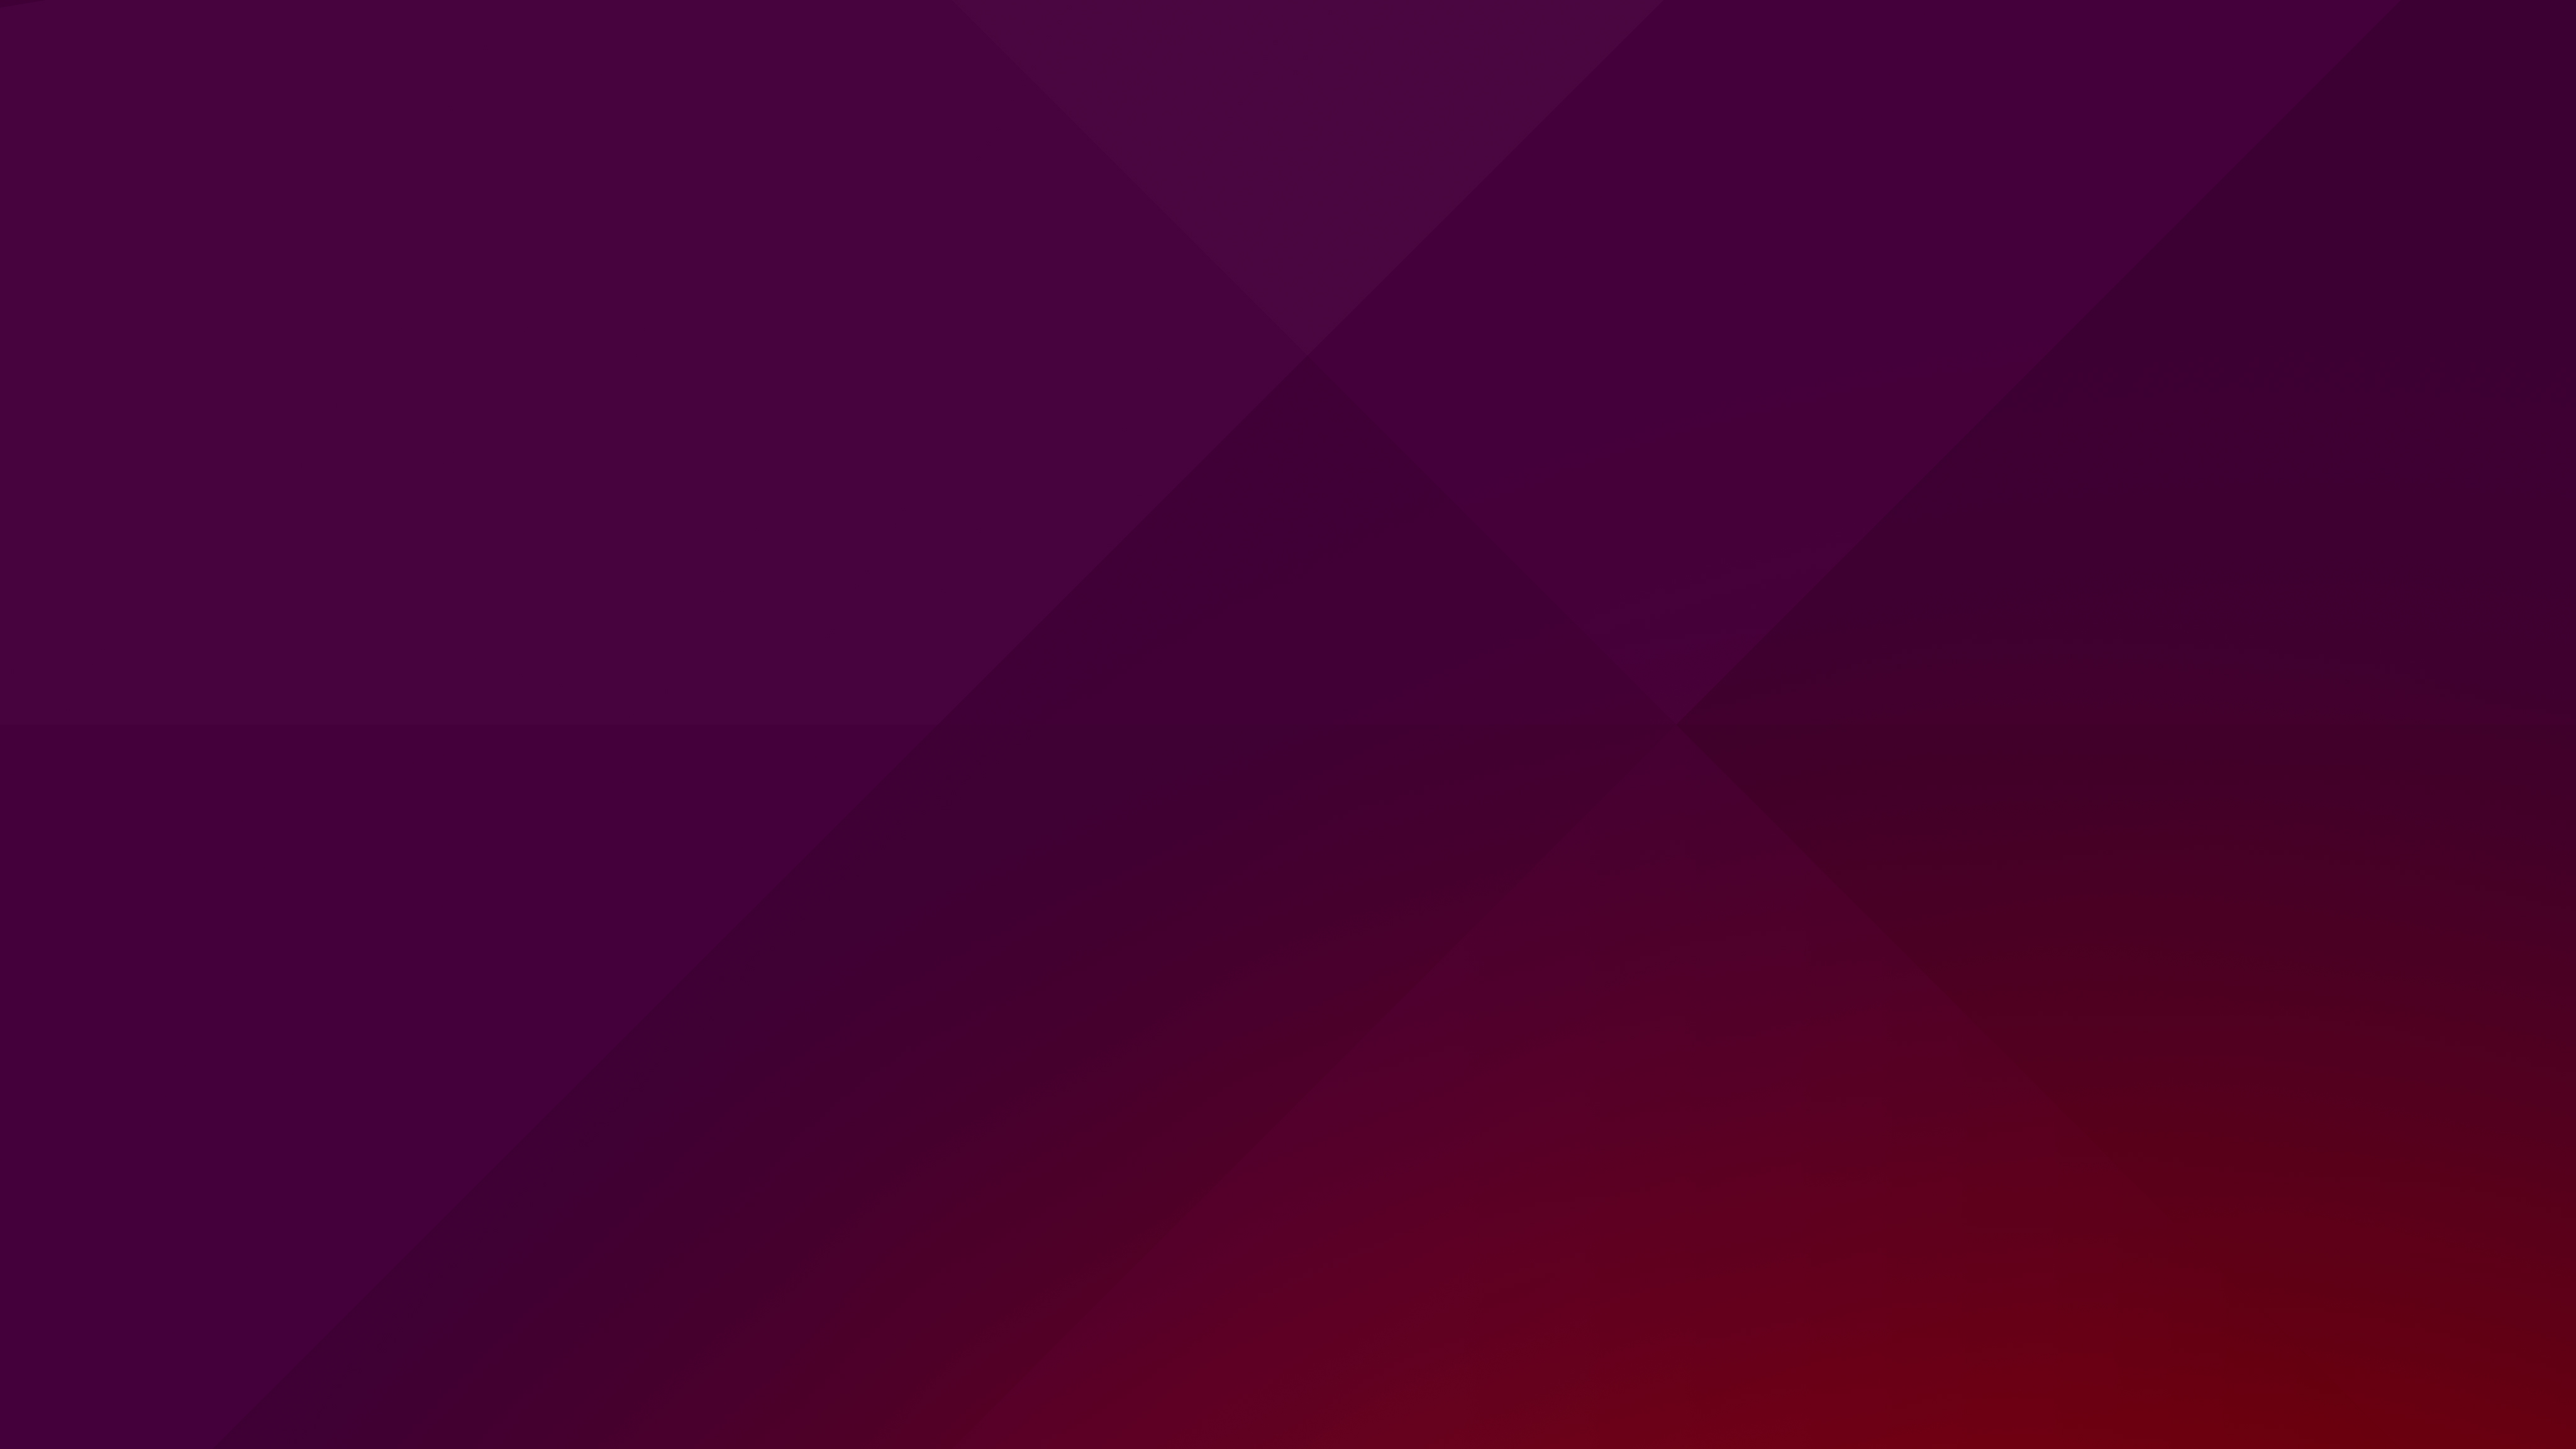 Meet The New Default Wallpaper of Ubuntu 1610   OMG Ubuntu 4096x2304